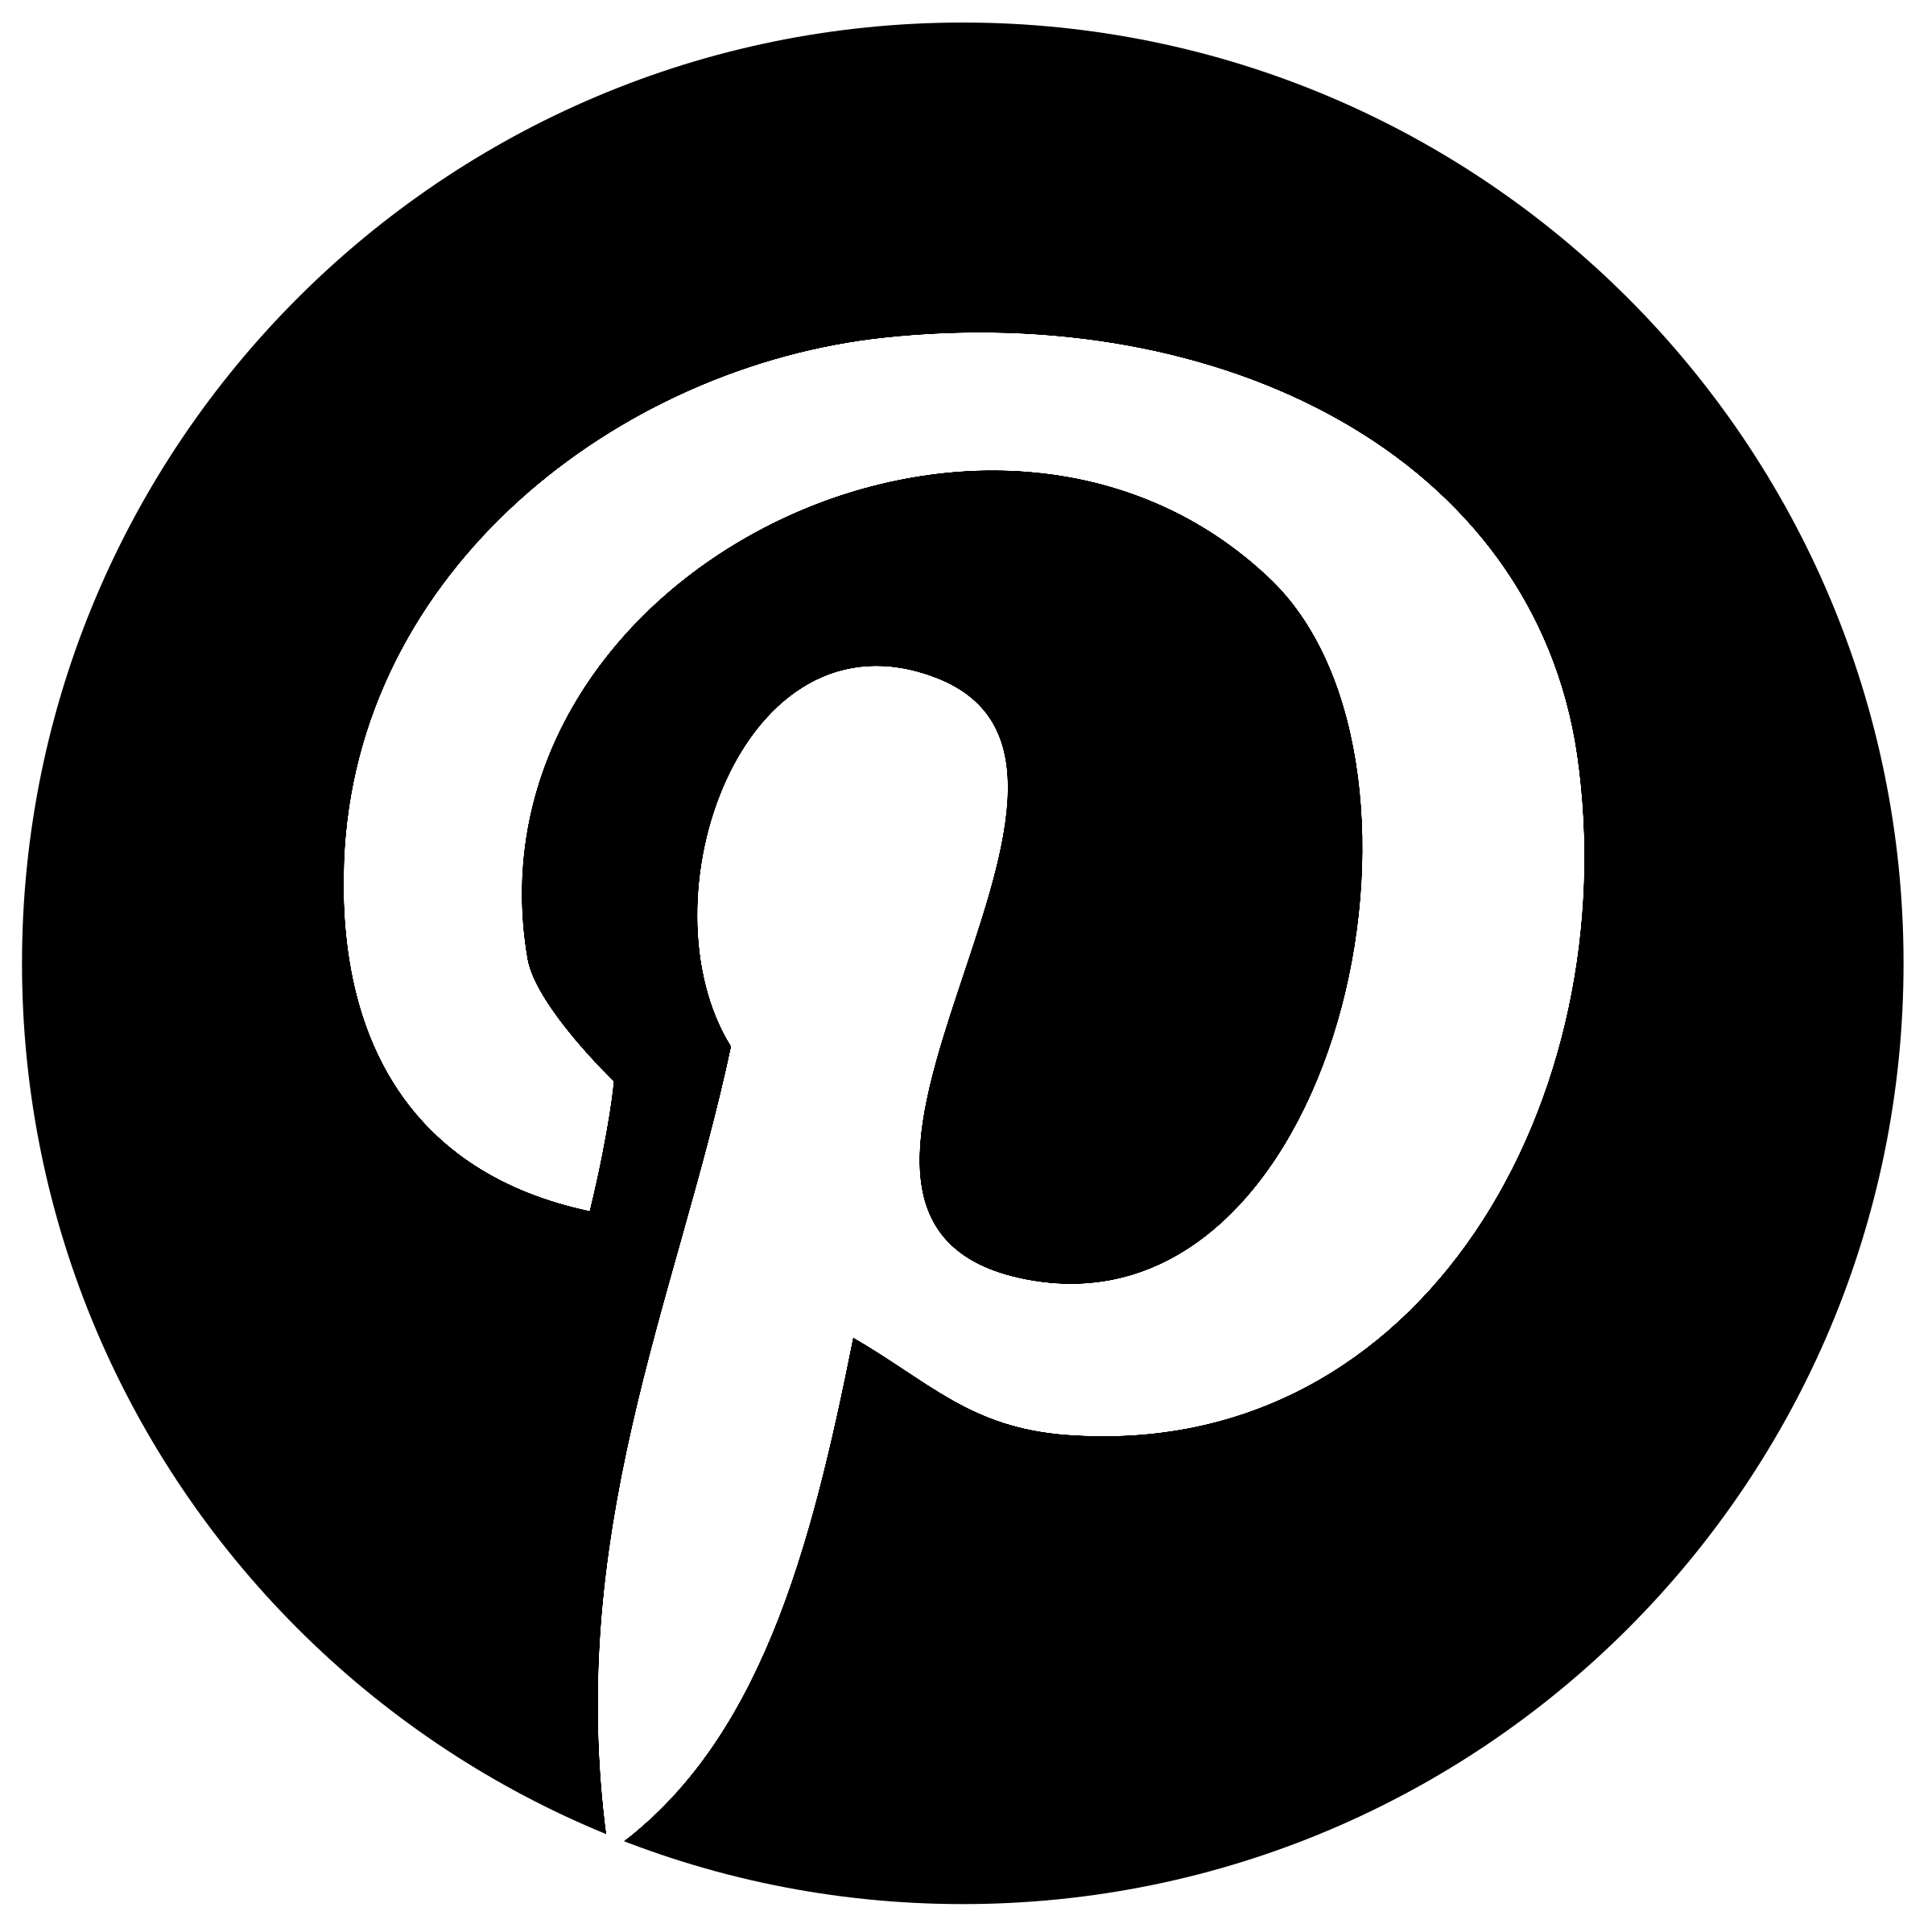 Pinterest Logo PNG Free File Download